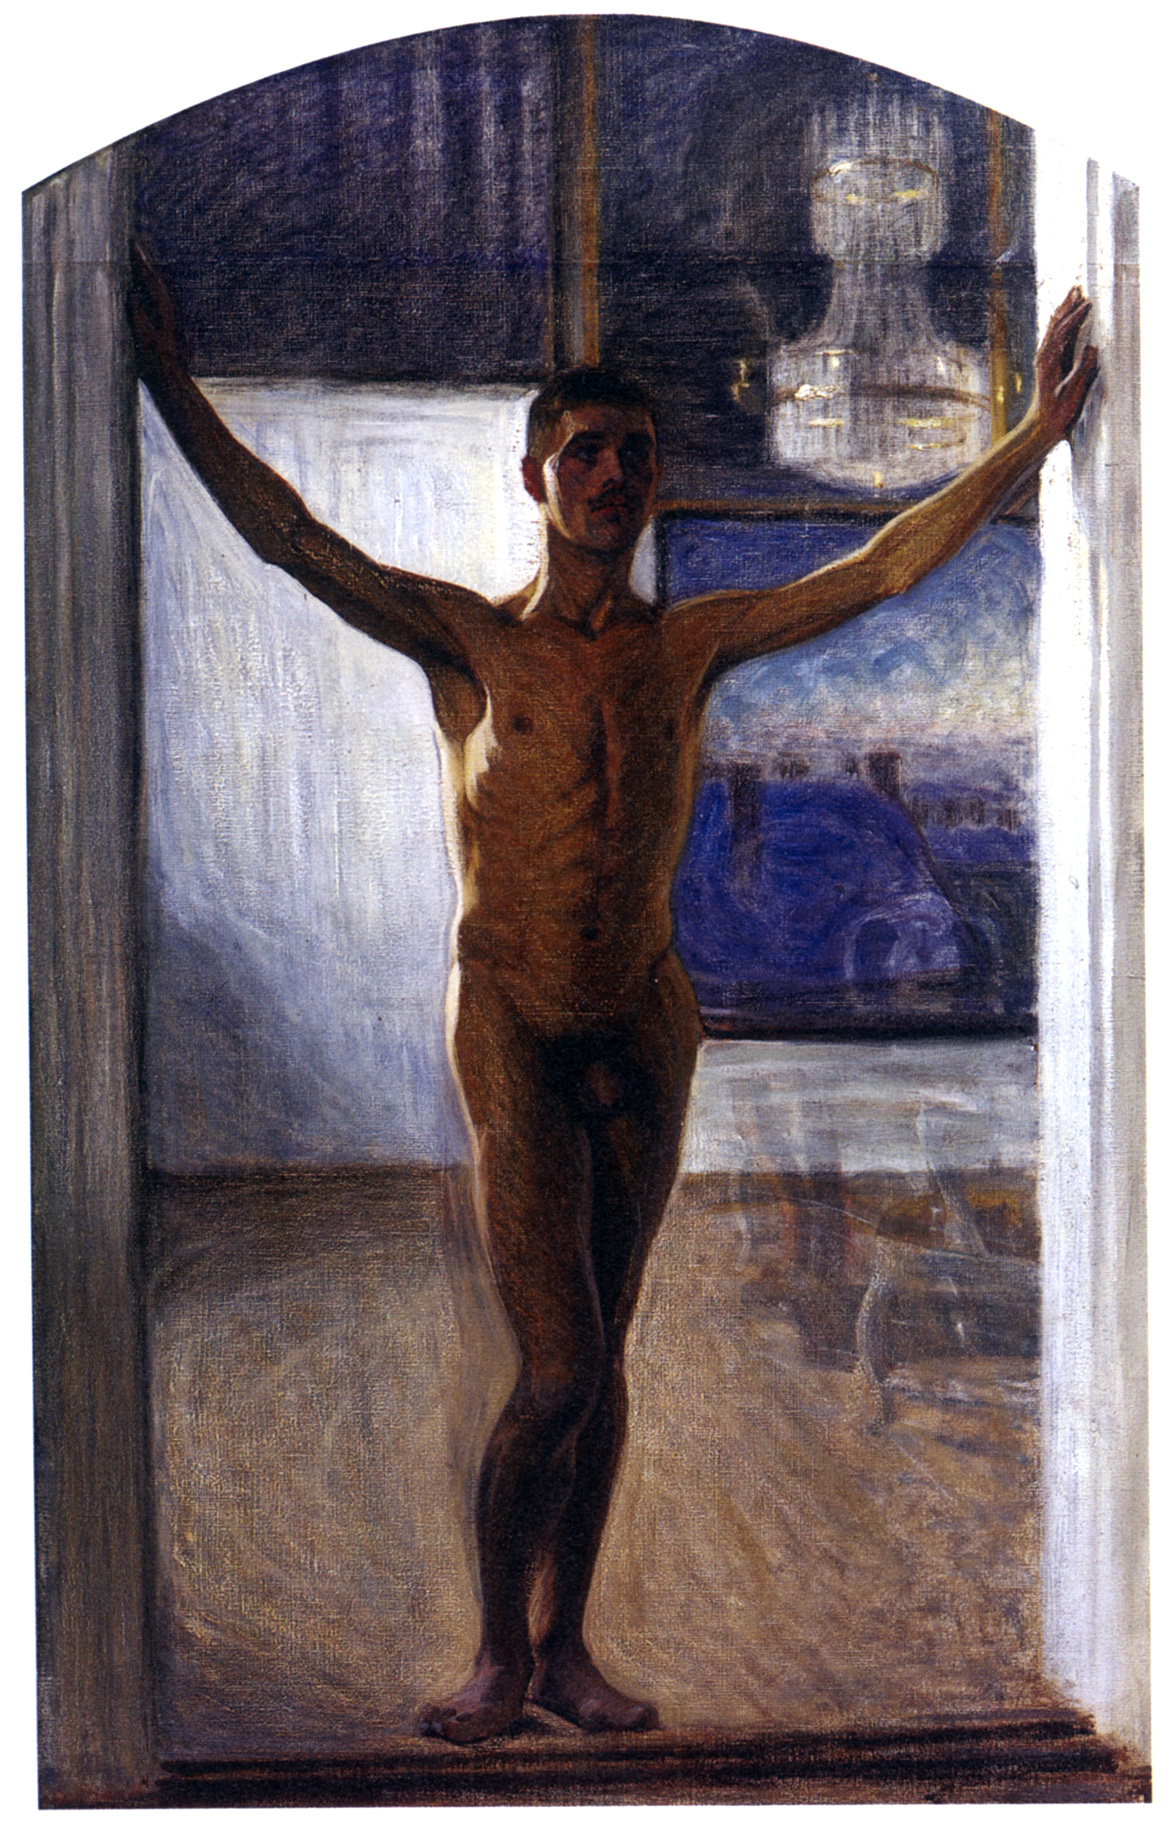 Eugéne_JANSSON_Nudo sulla soglia_(Knut Nyman )1906_(Prins Eugens Waldemarsudde_Stoccolma)